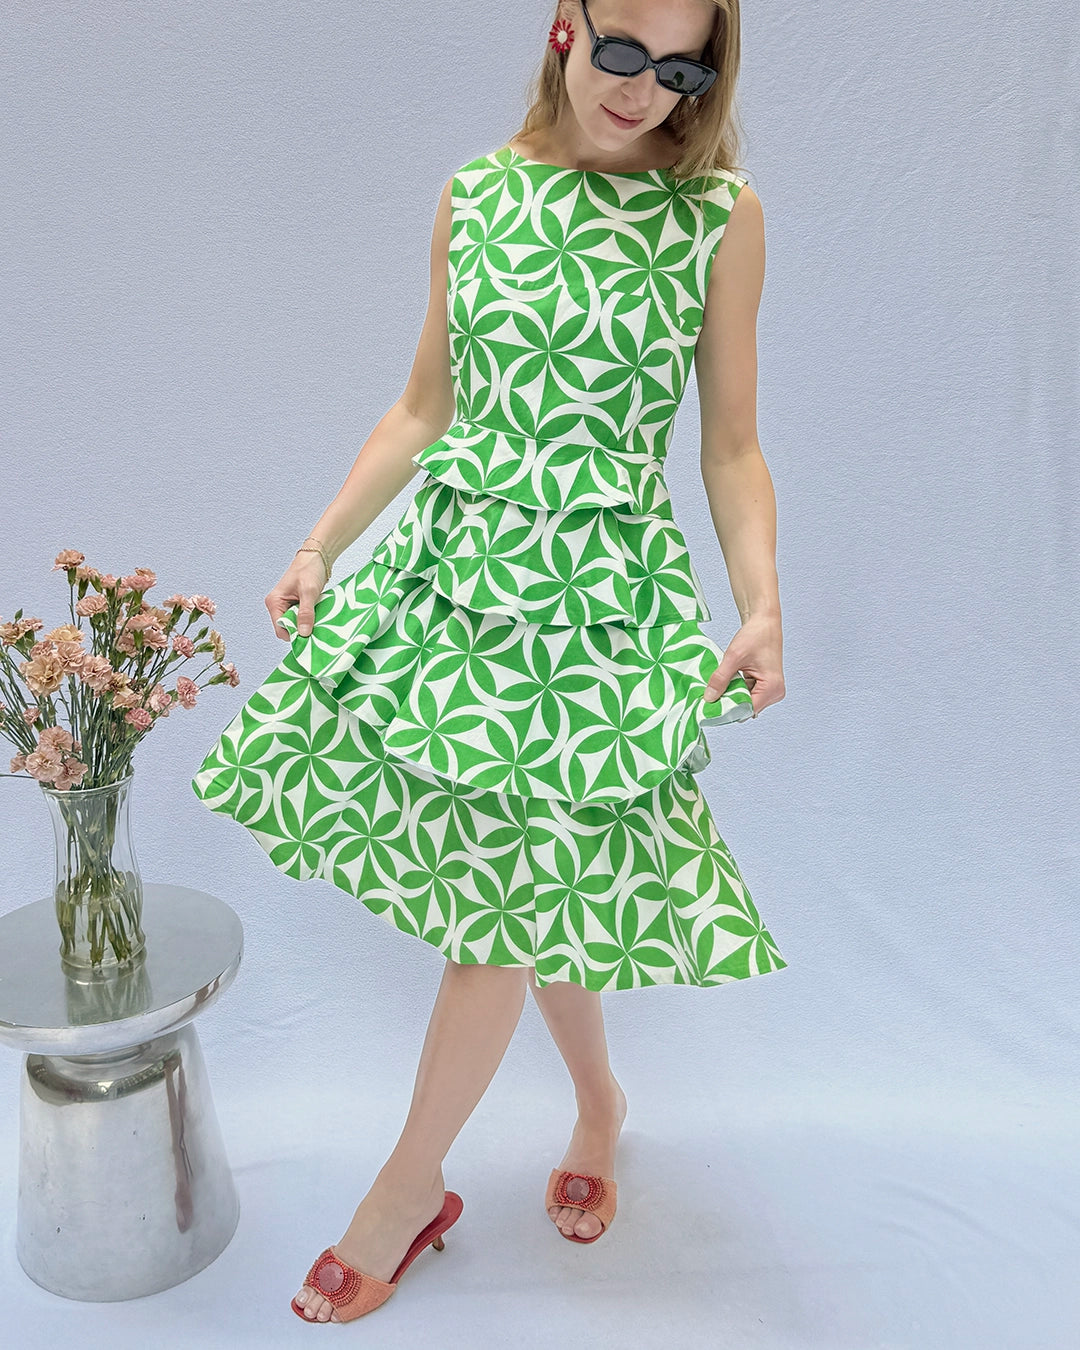 1960s-Style Mod Print Sheath Dress With Tiered Flounce Skirt